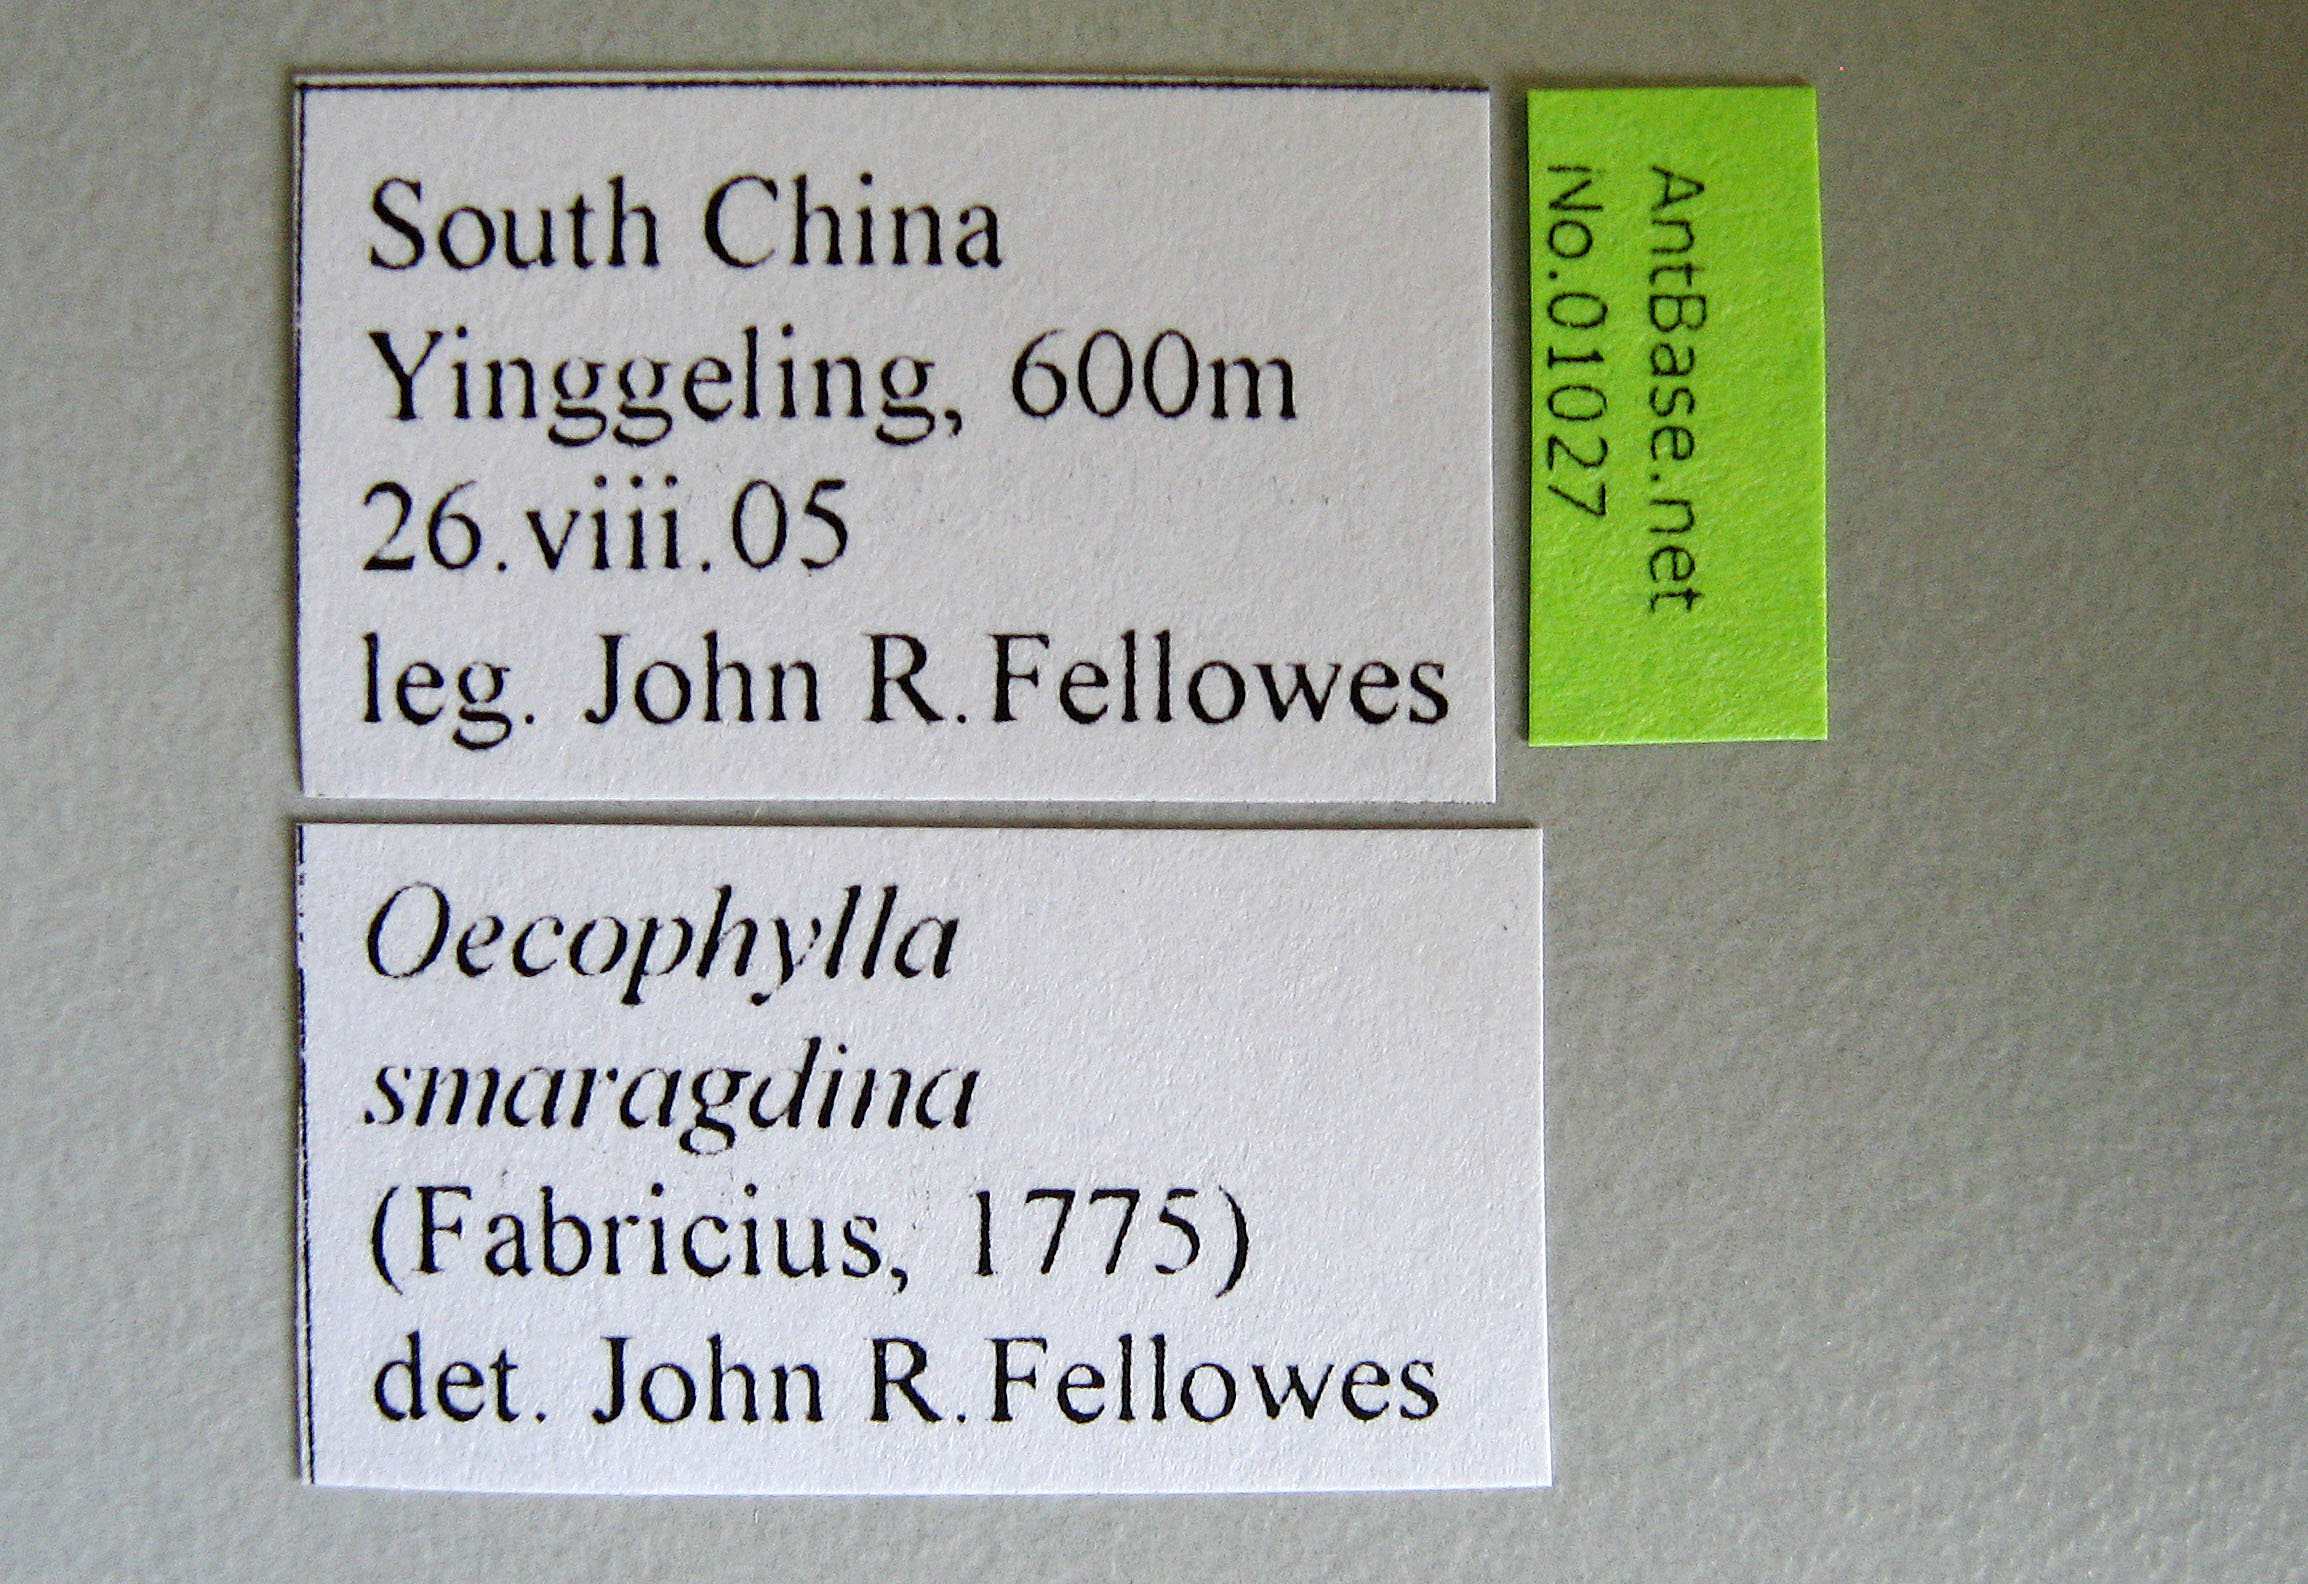 Foto Oecophylla smaragdina Fabricius, 1775 Label